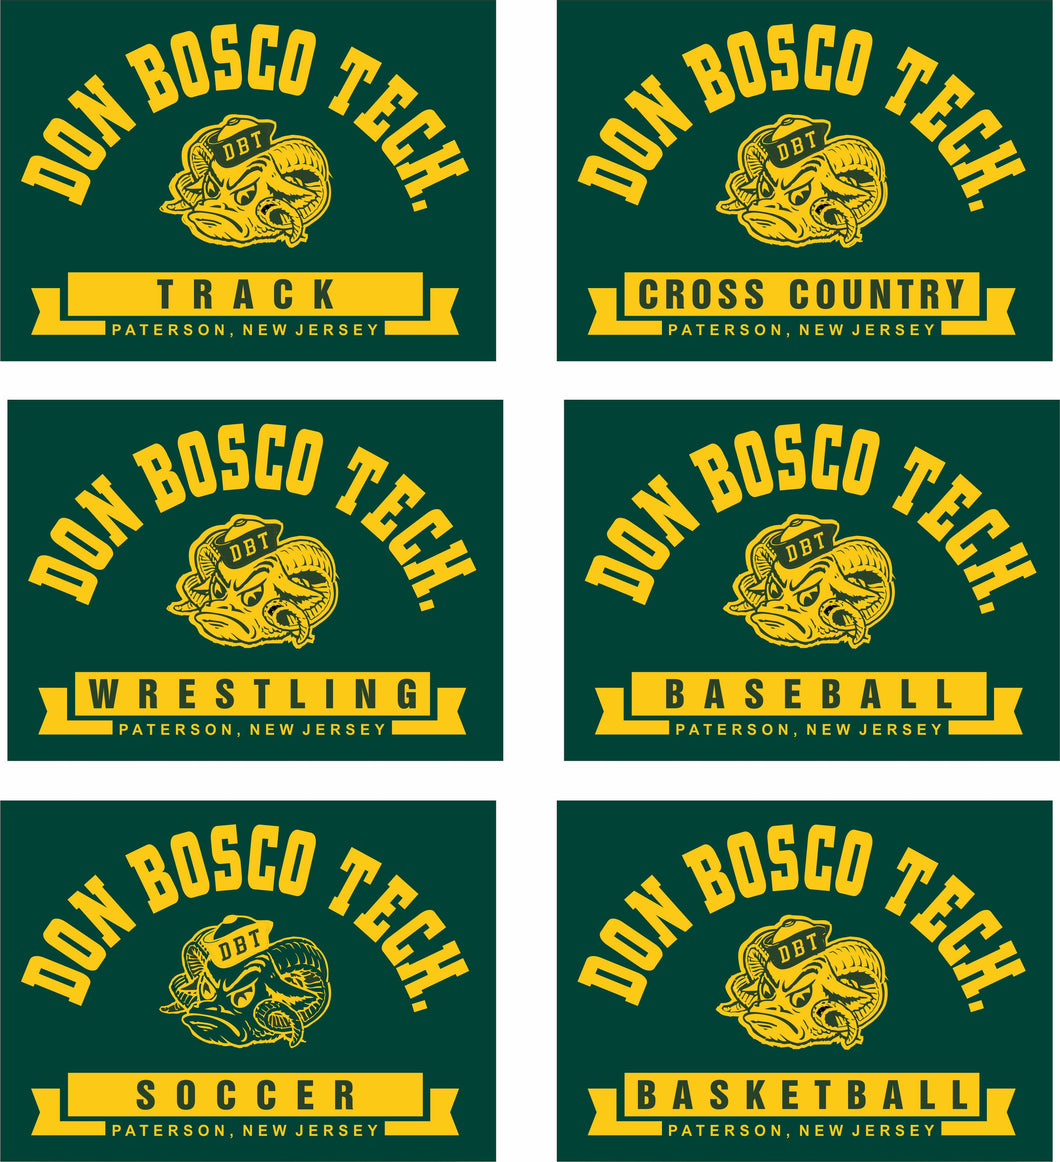 Don Bosco Tech ALL SPORTS T-Shirt Free Shipping in USA.